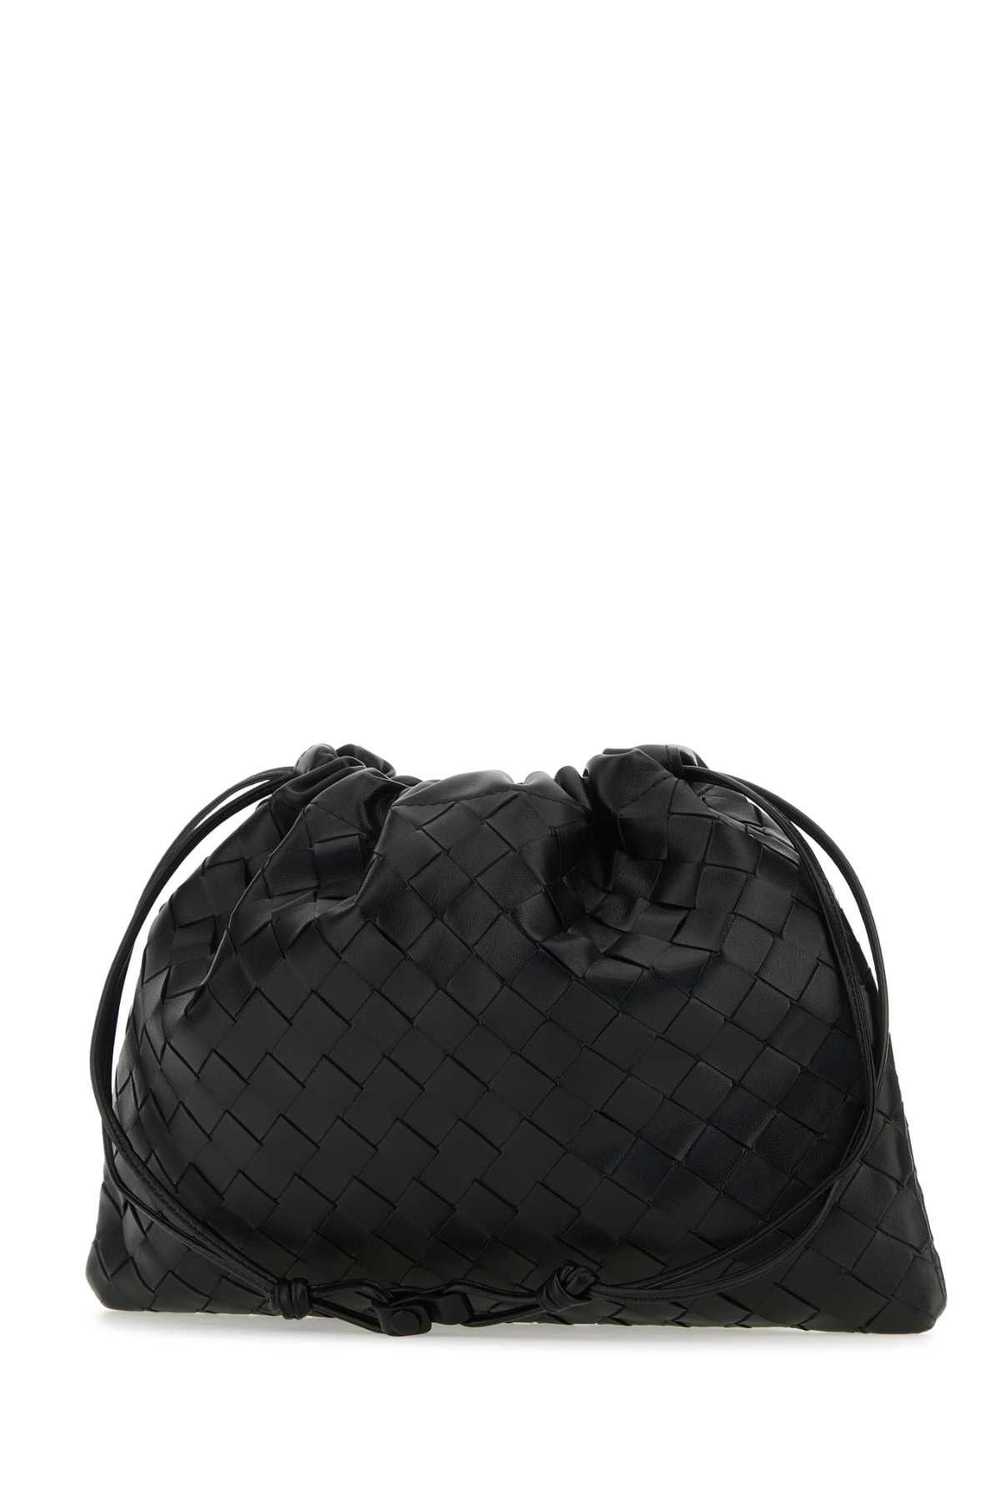 Bottega Veneta Black Leather Medium Clutch - image 2